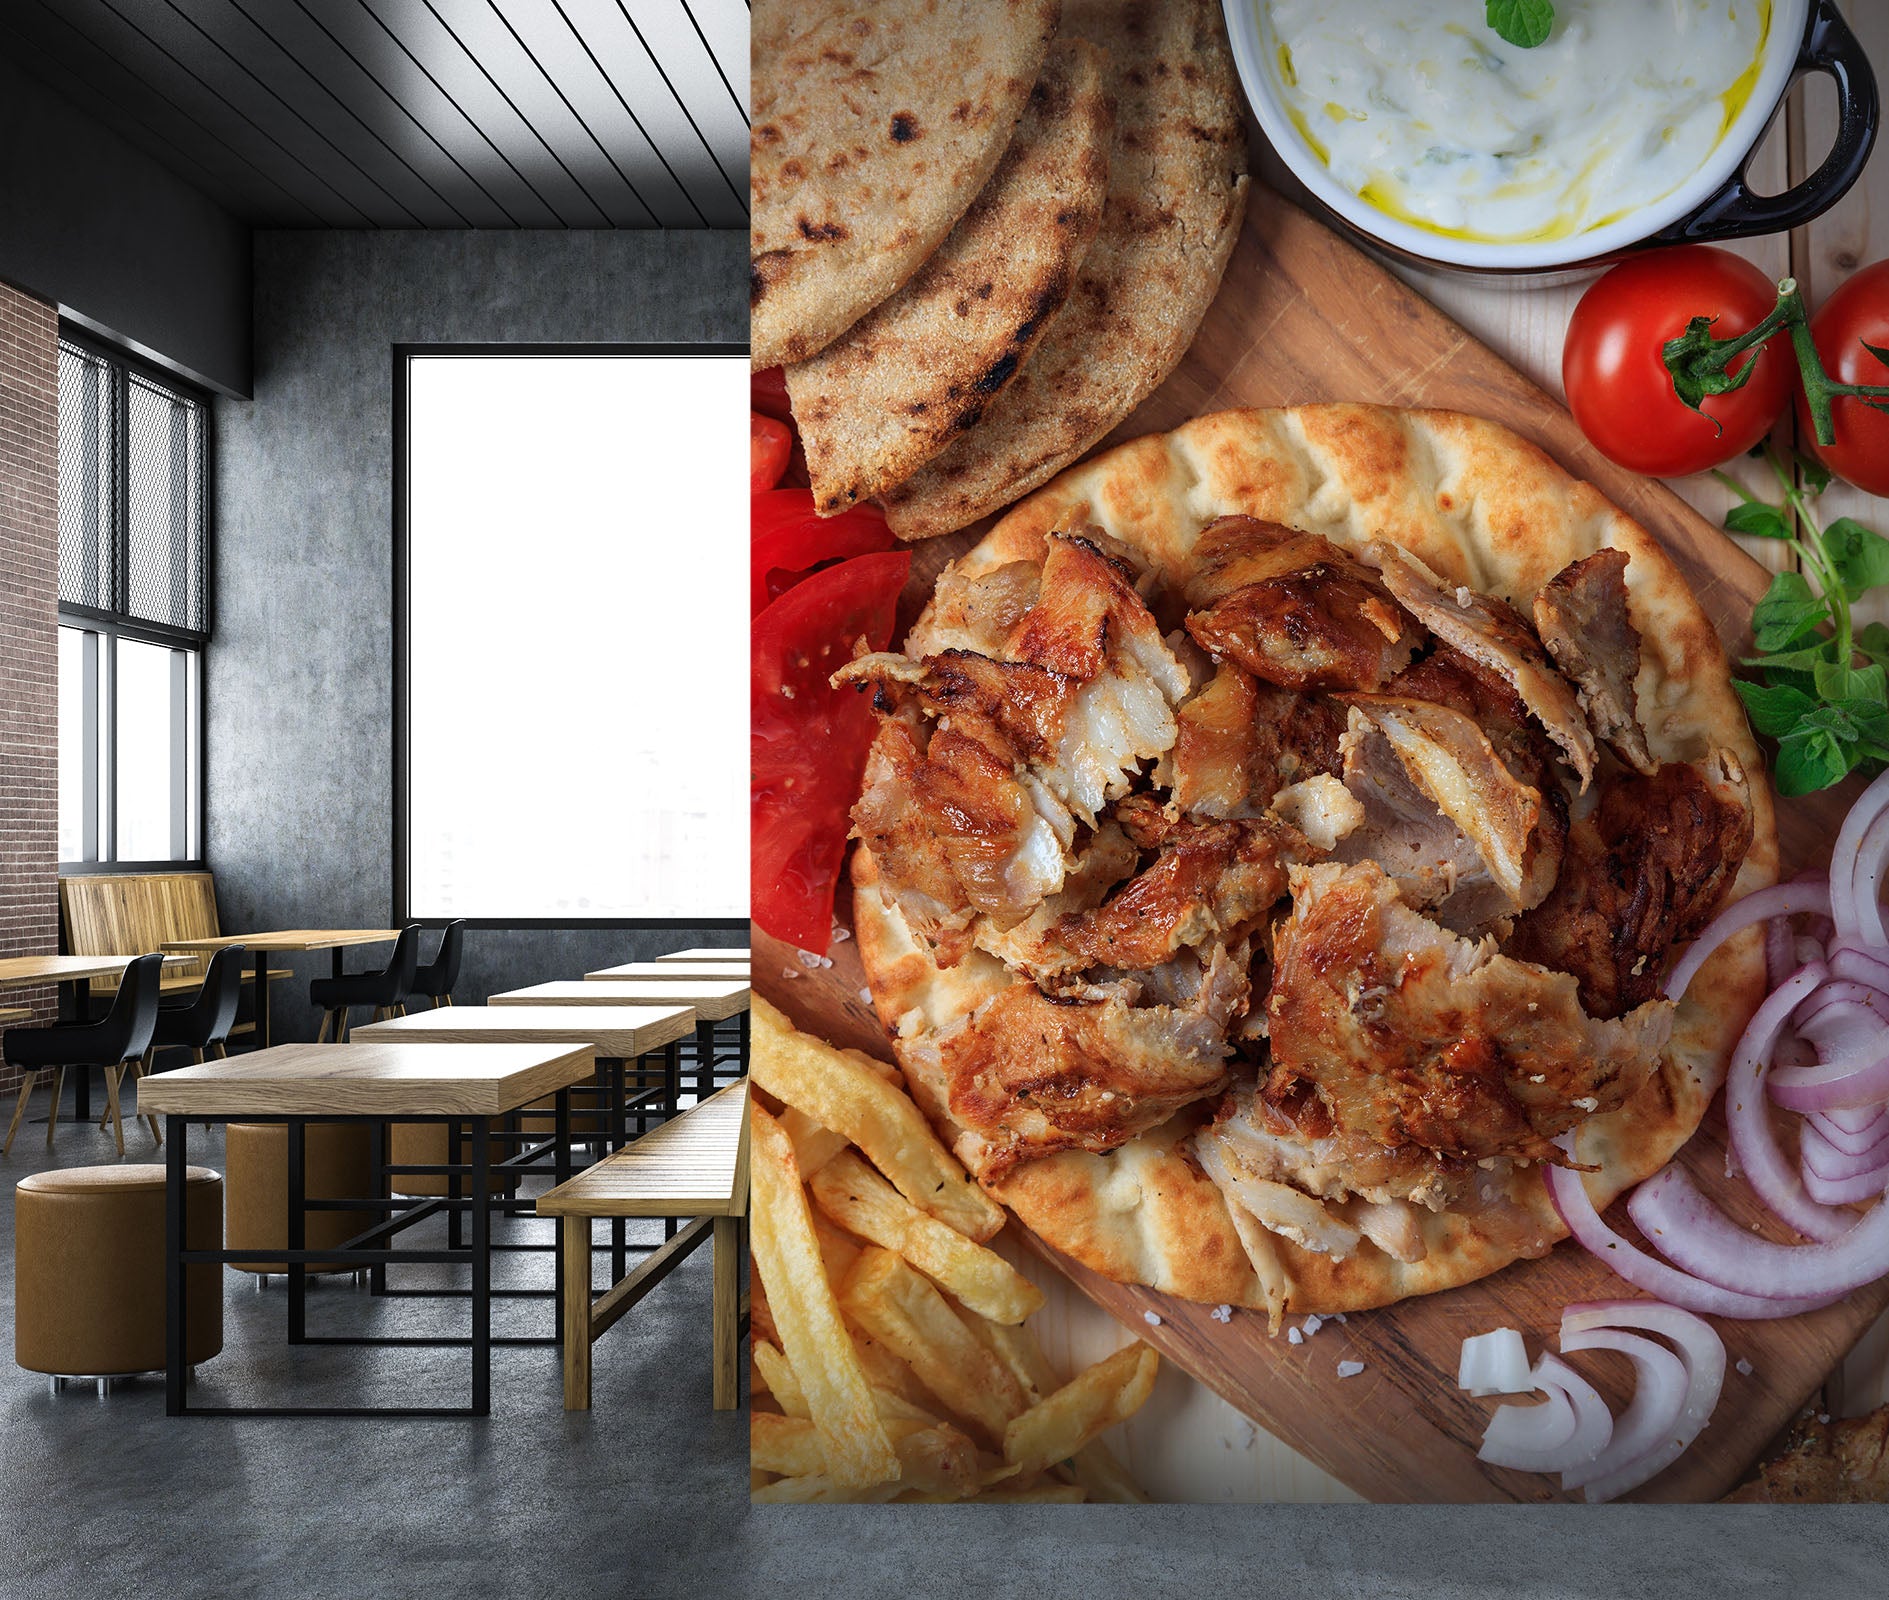 3D Grill Kebab Shop BBQ 365 Wall Mural Wall Murals Commercial